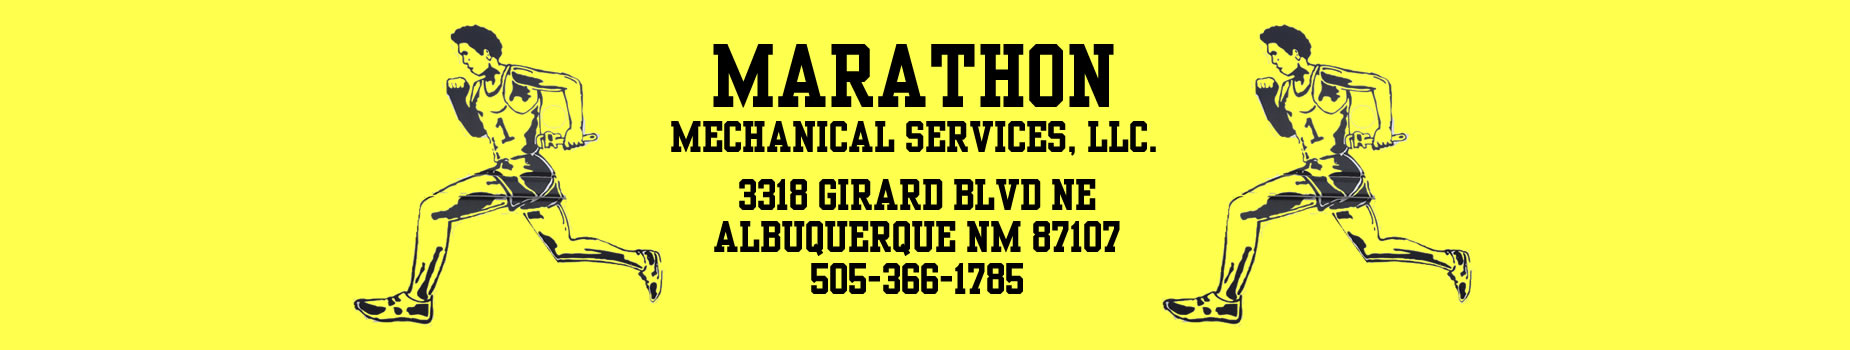 Marathon Mechanical Services, LLC Logo